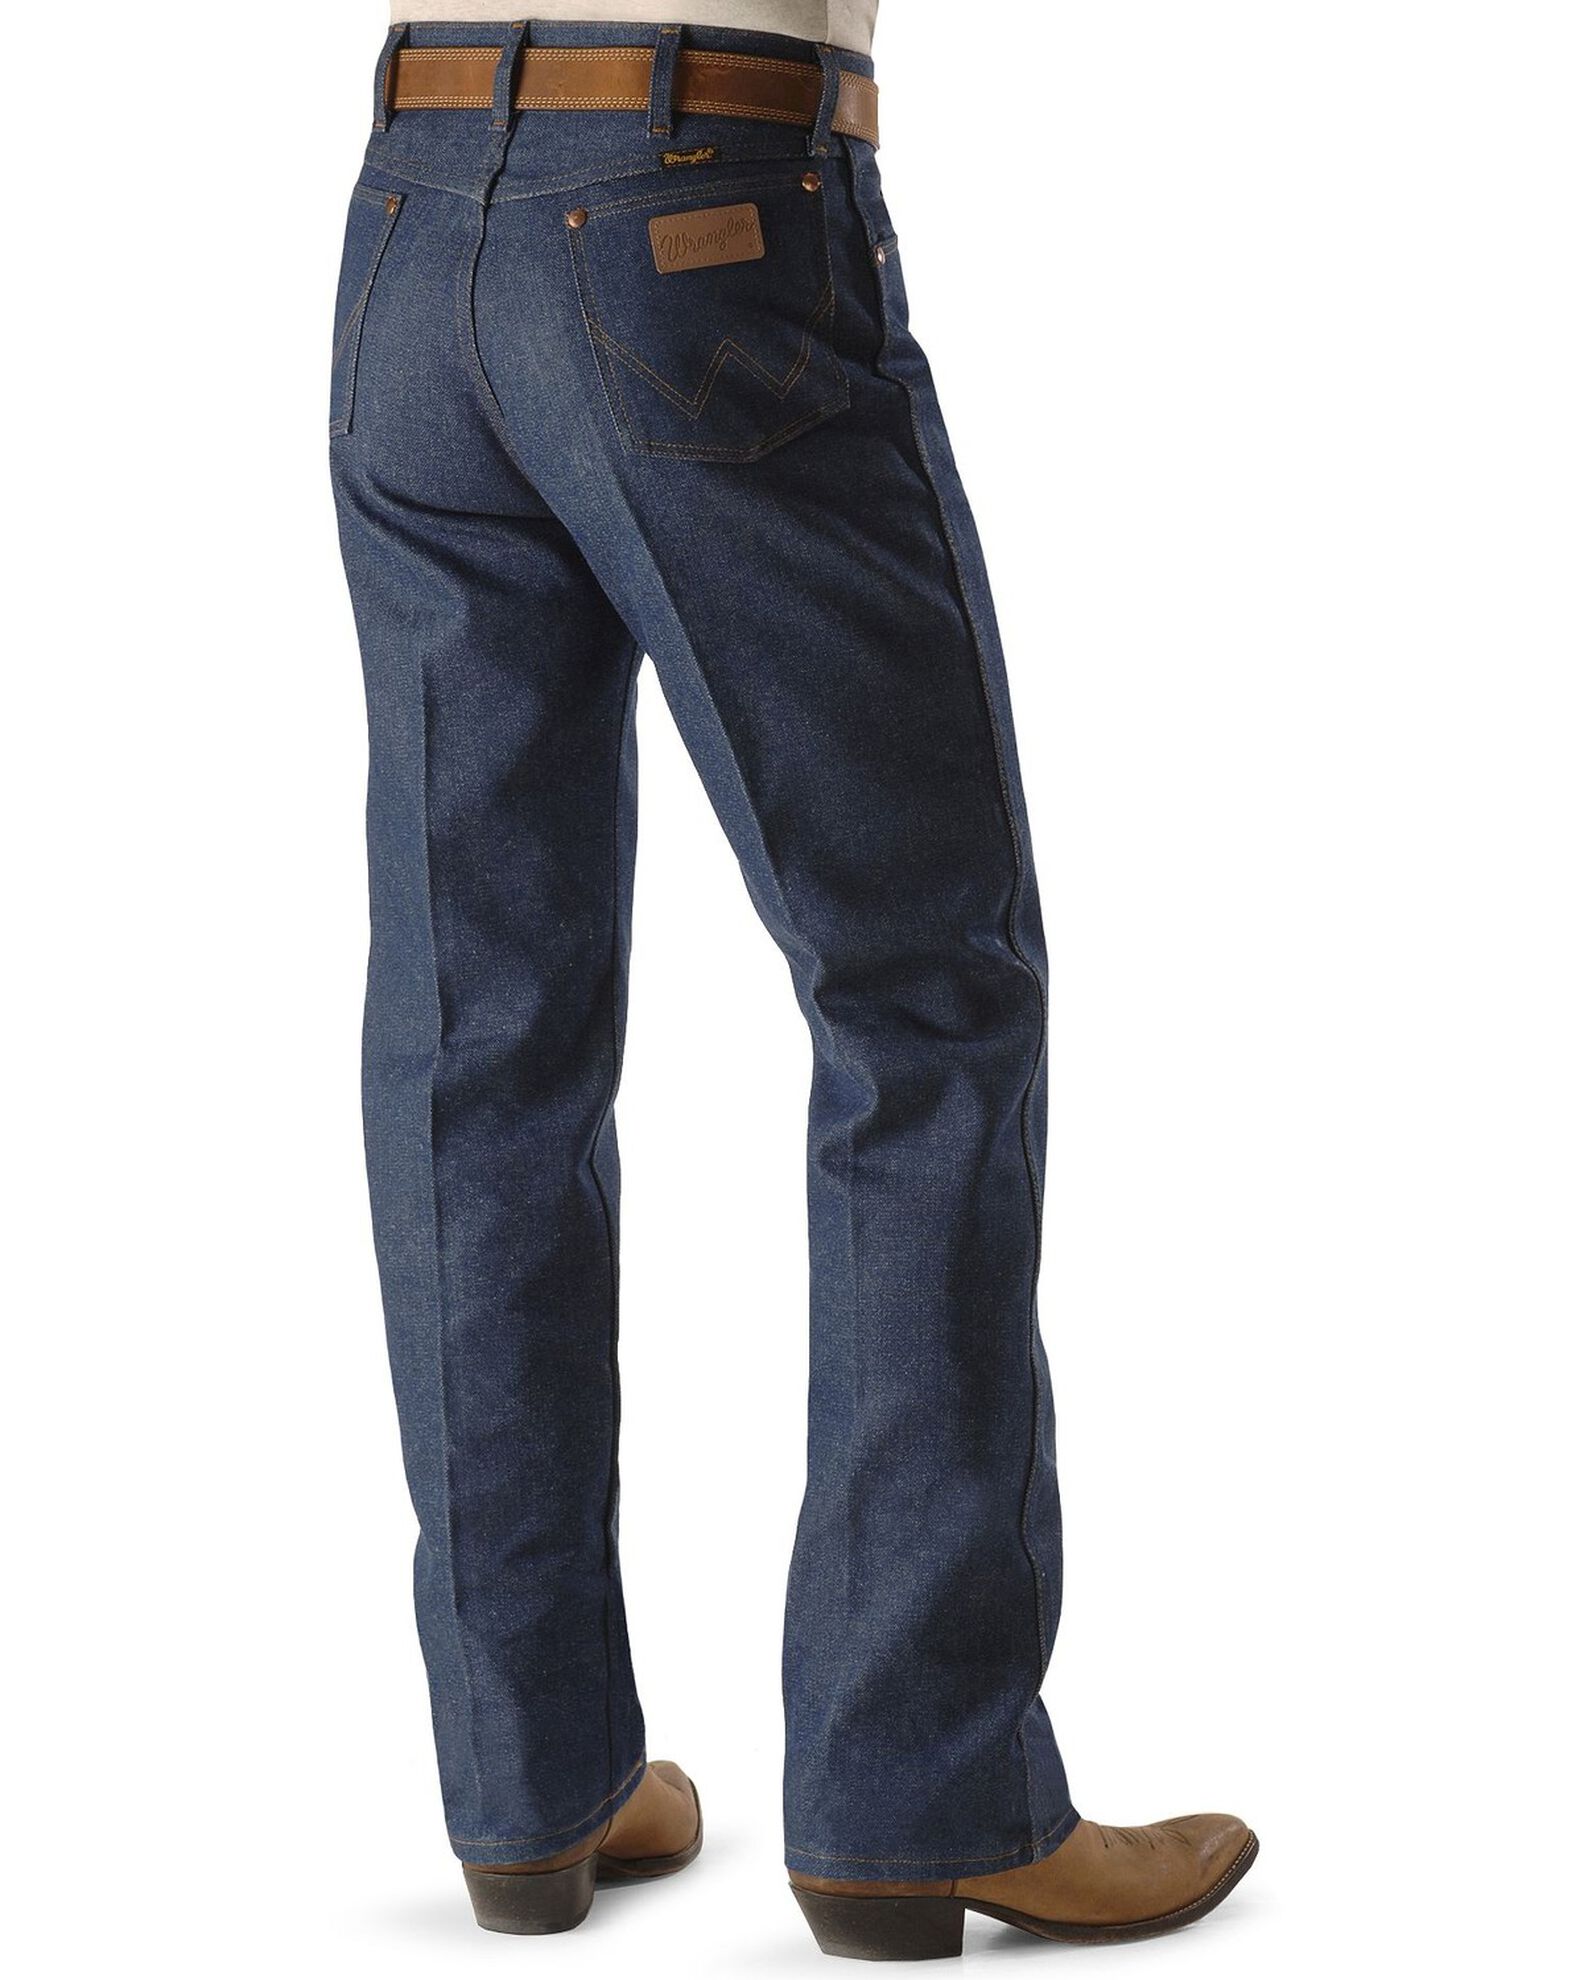 Wrangler 13MWZ Cowboy Cut Rigid Original Fit Jeans - Up to 44